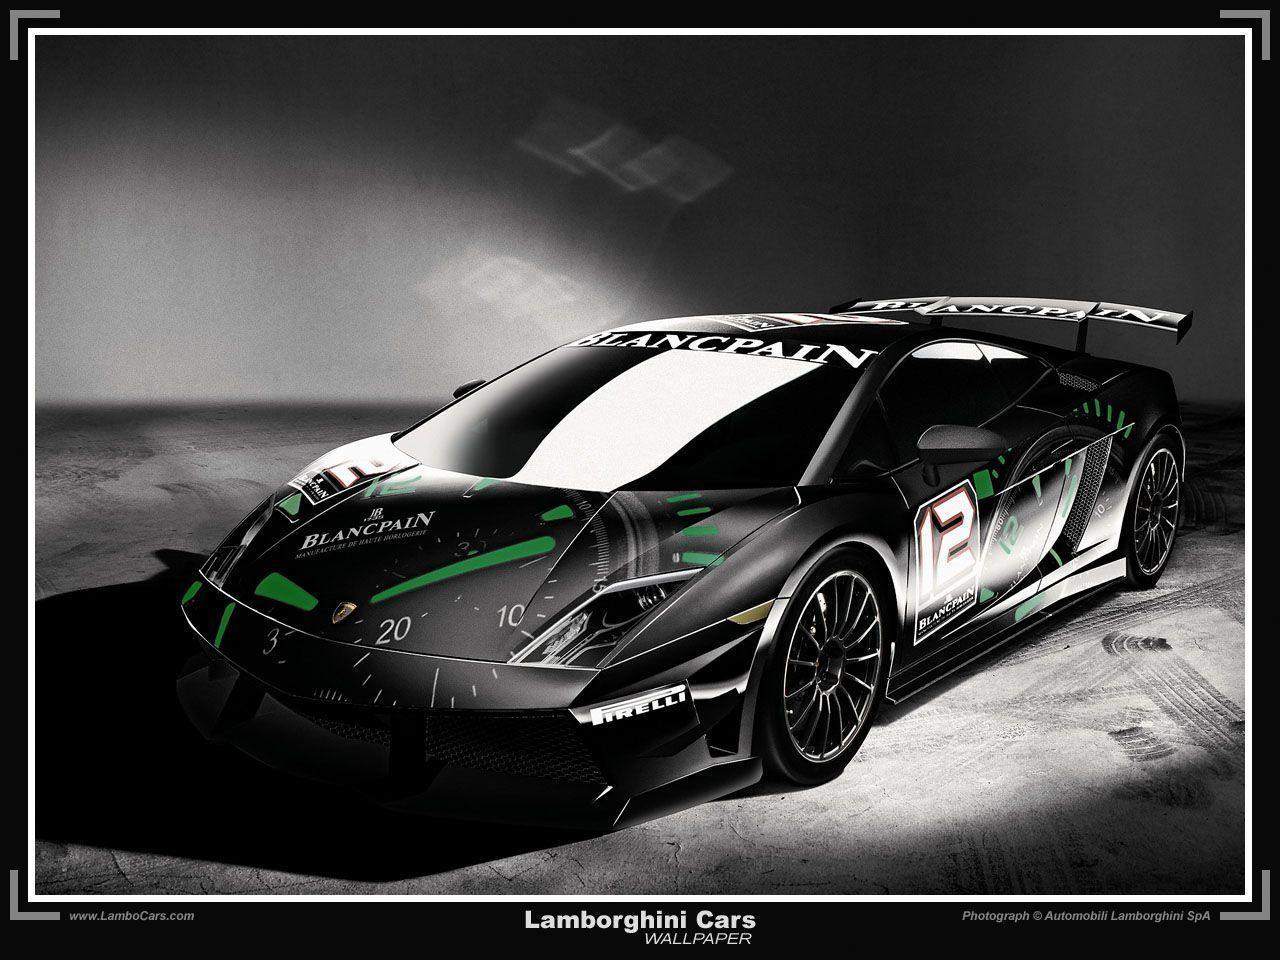 Incredible Black Lamborghini Gallardo Wallpaper 1280x960PX